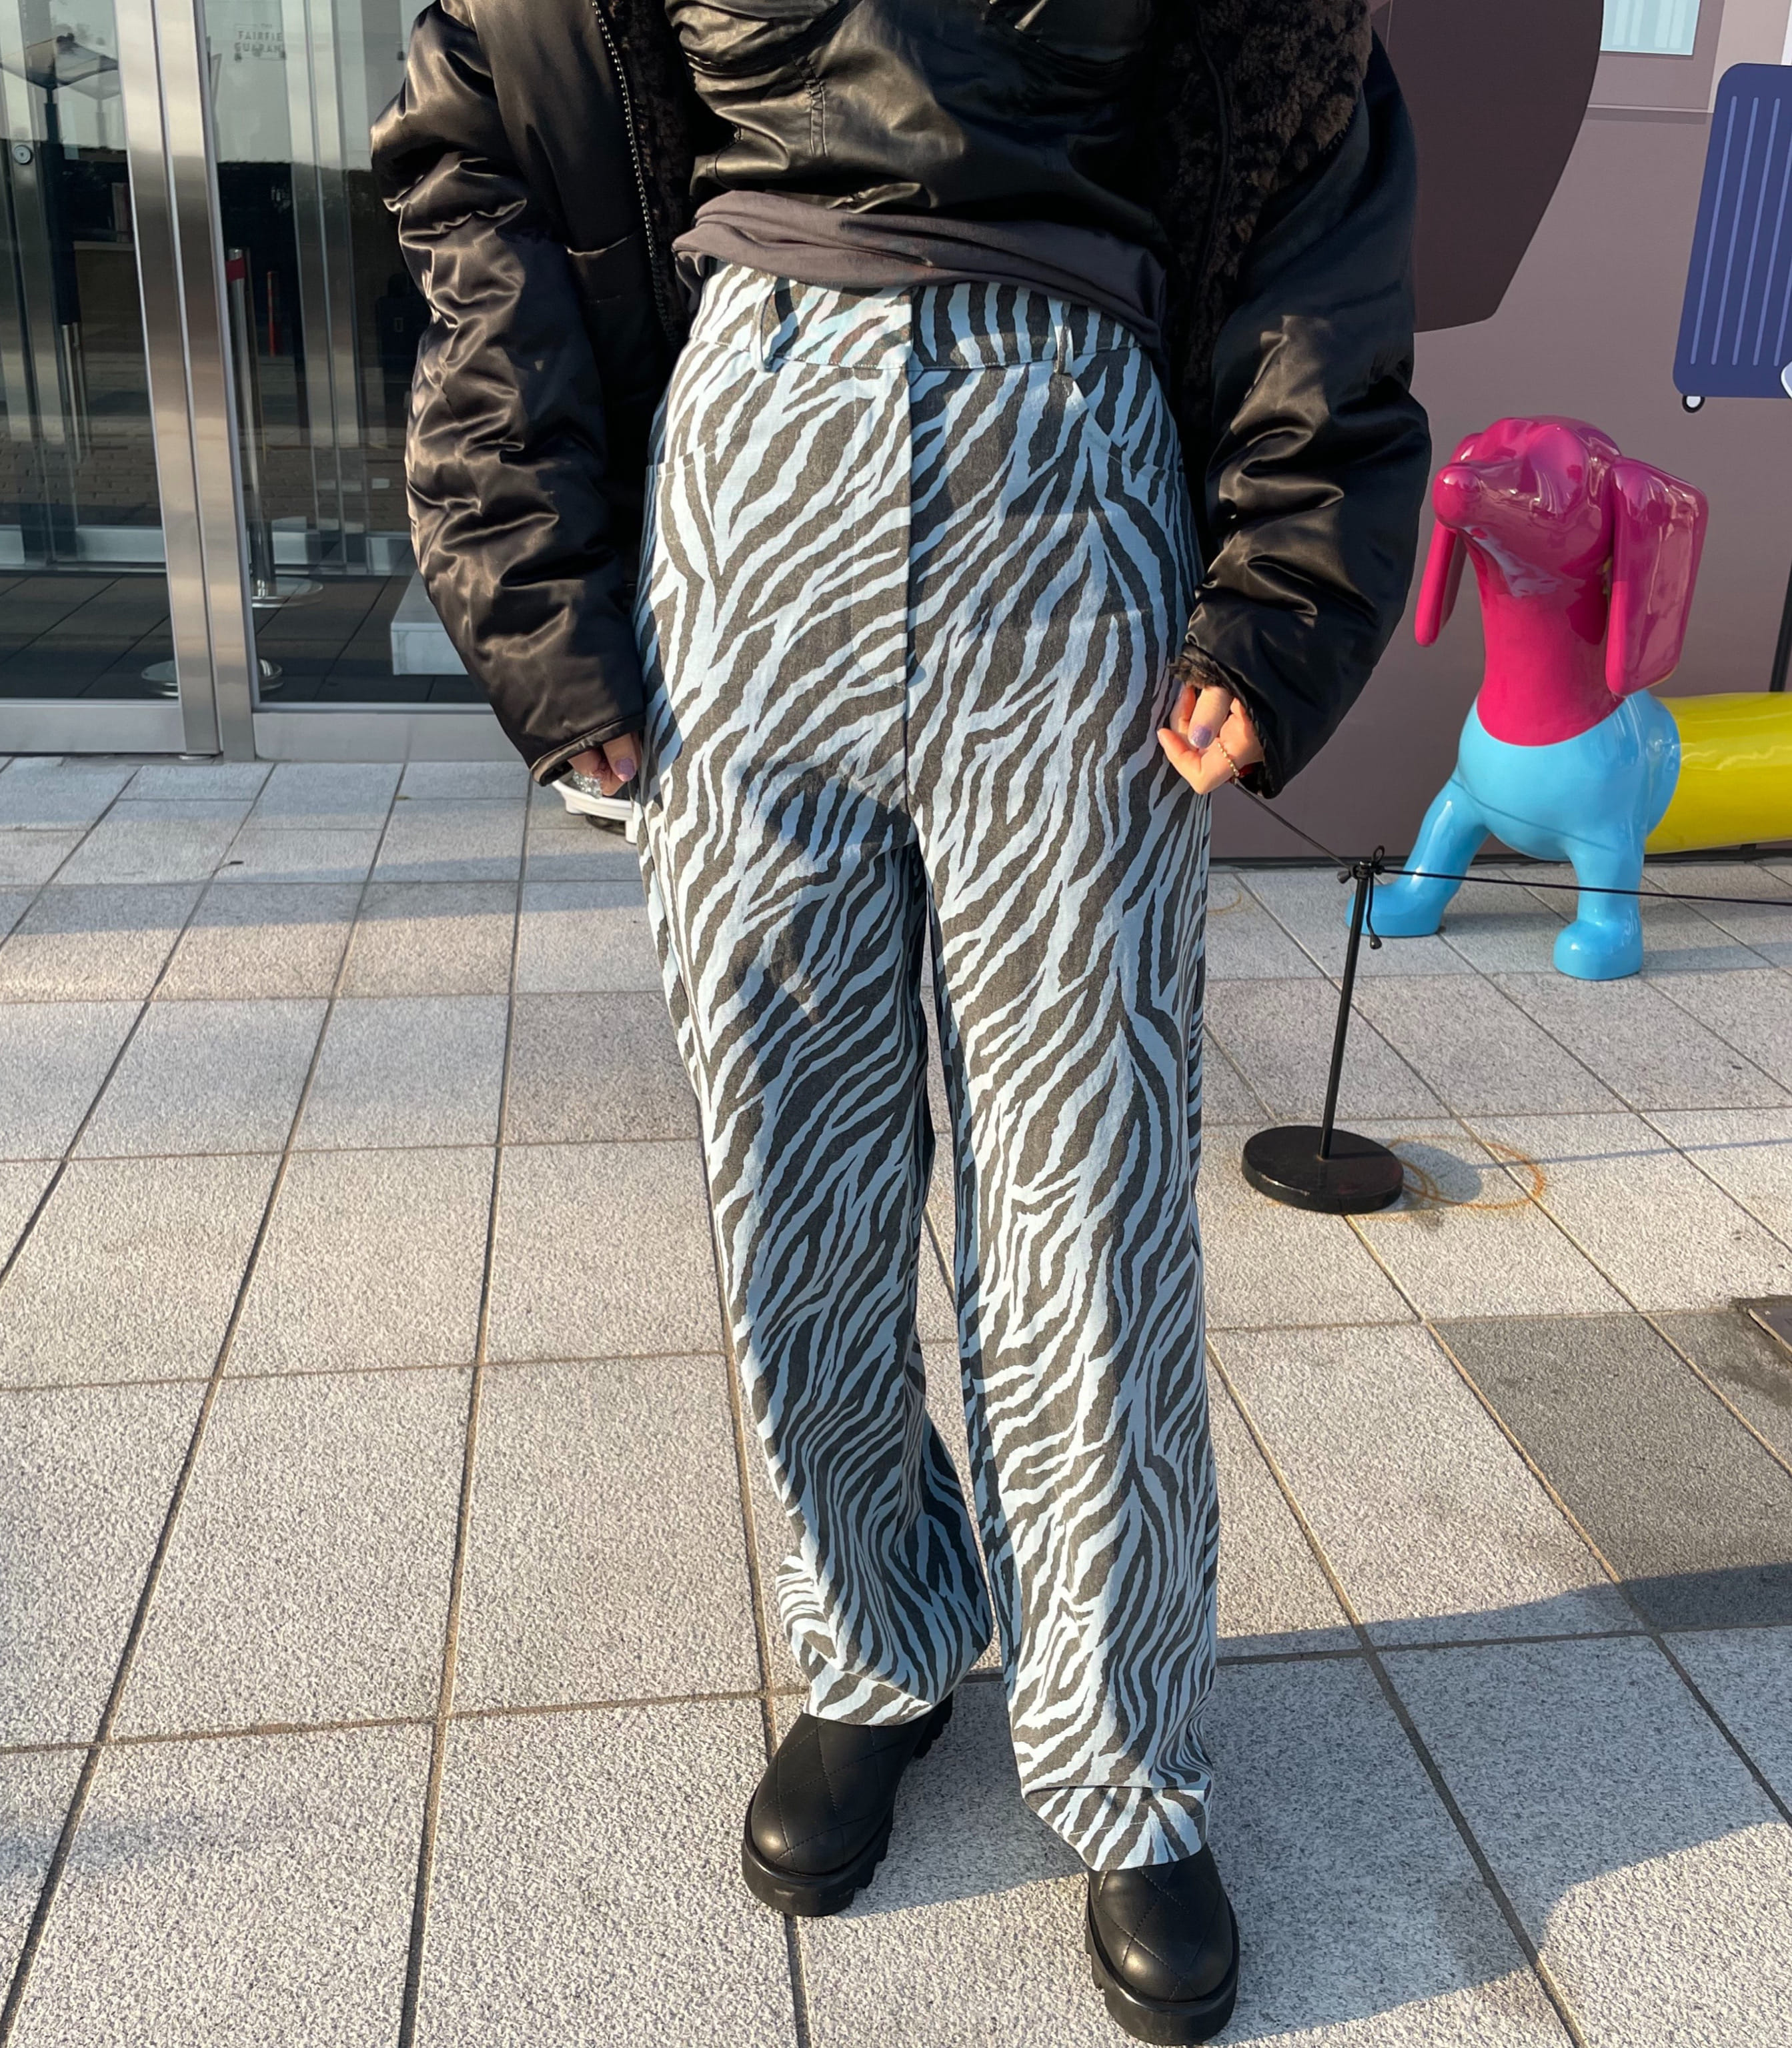 zebra pants